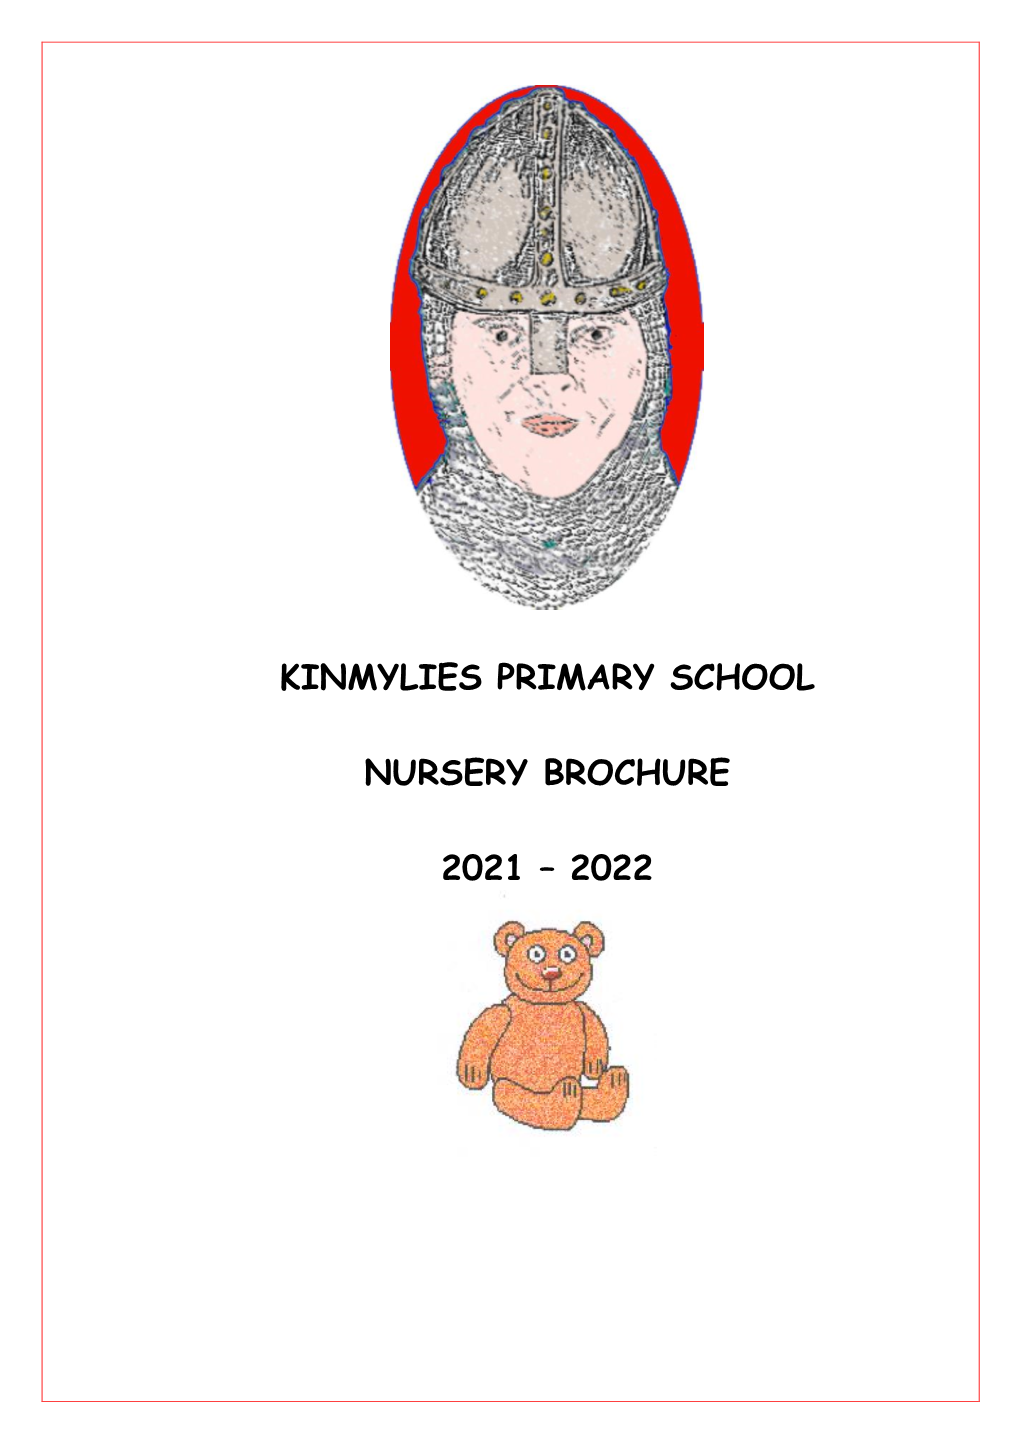 Kinmylies Primary School Nursery Page 3